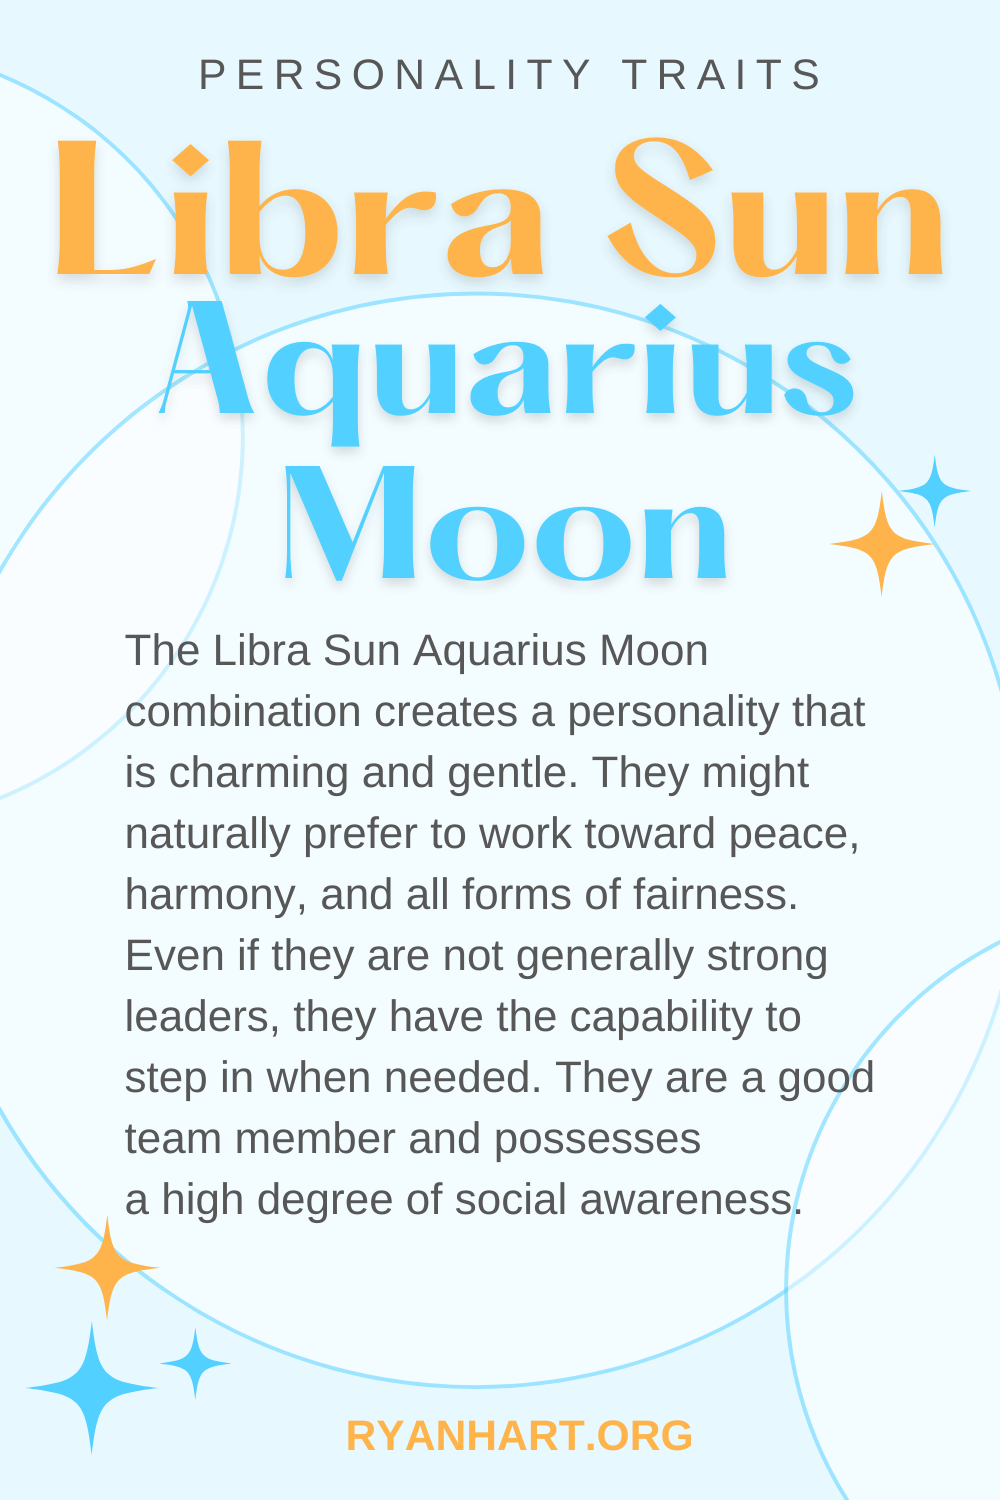 Libra Sun Aquarius Moon Description